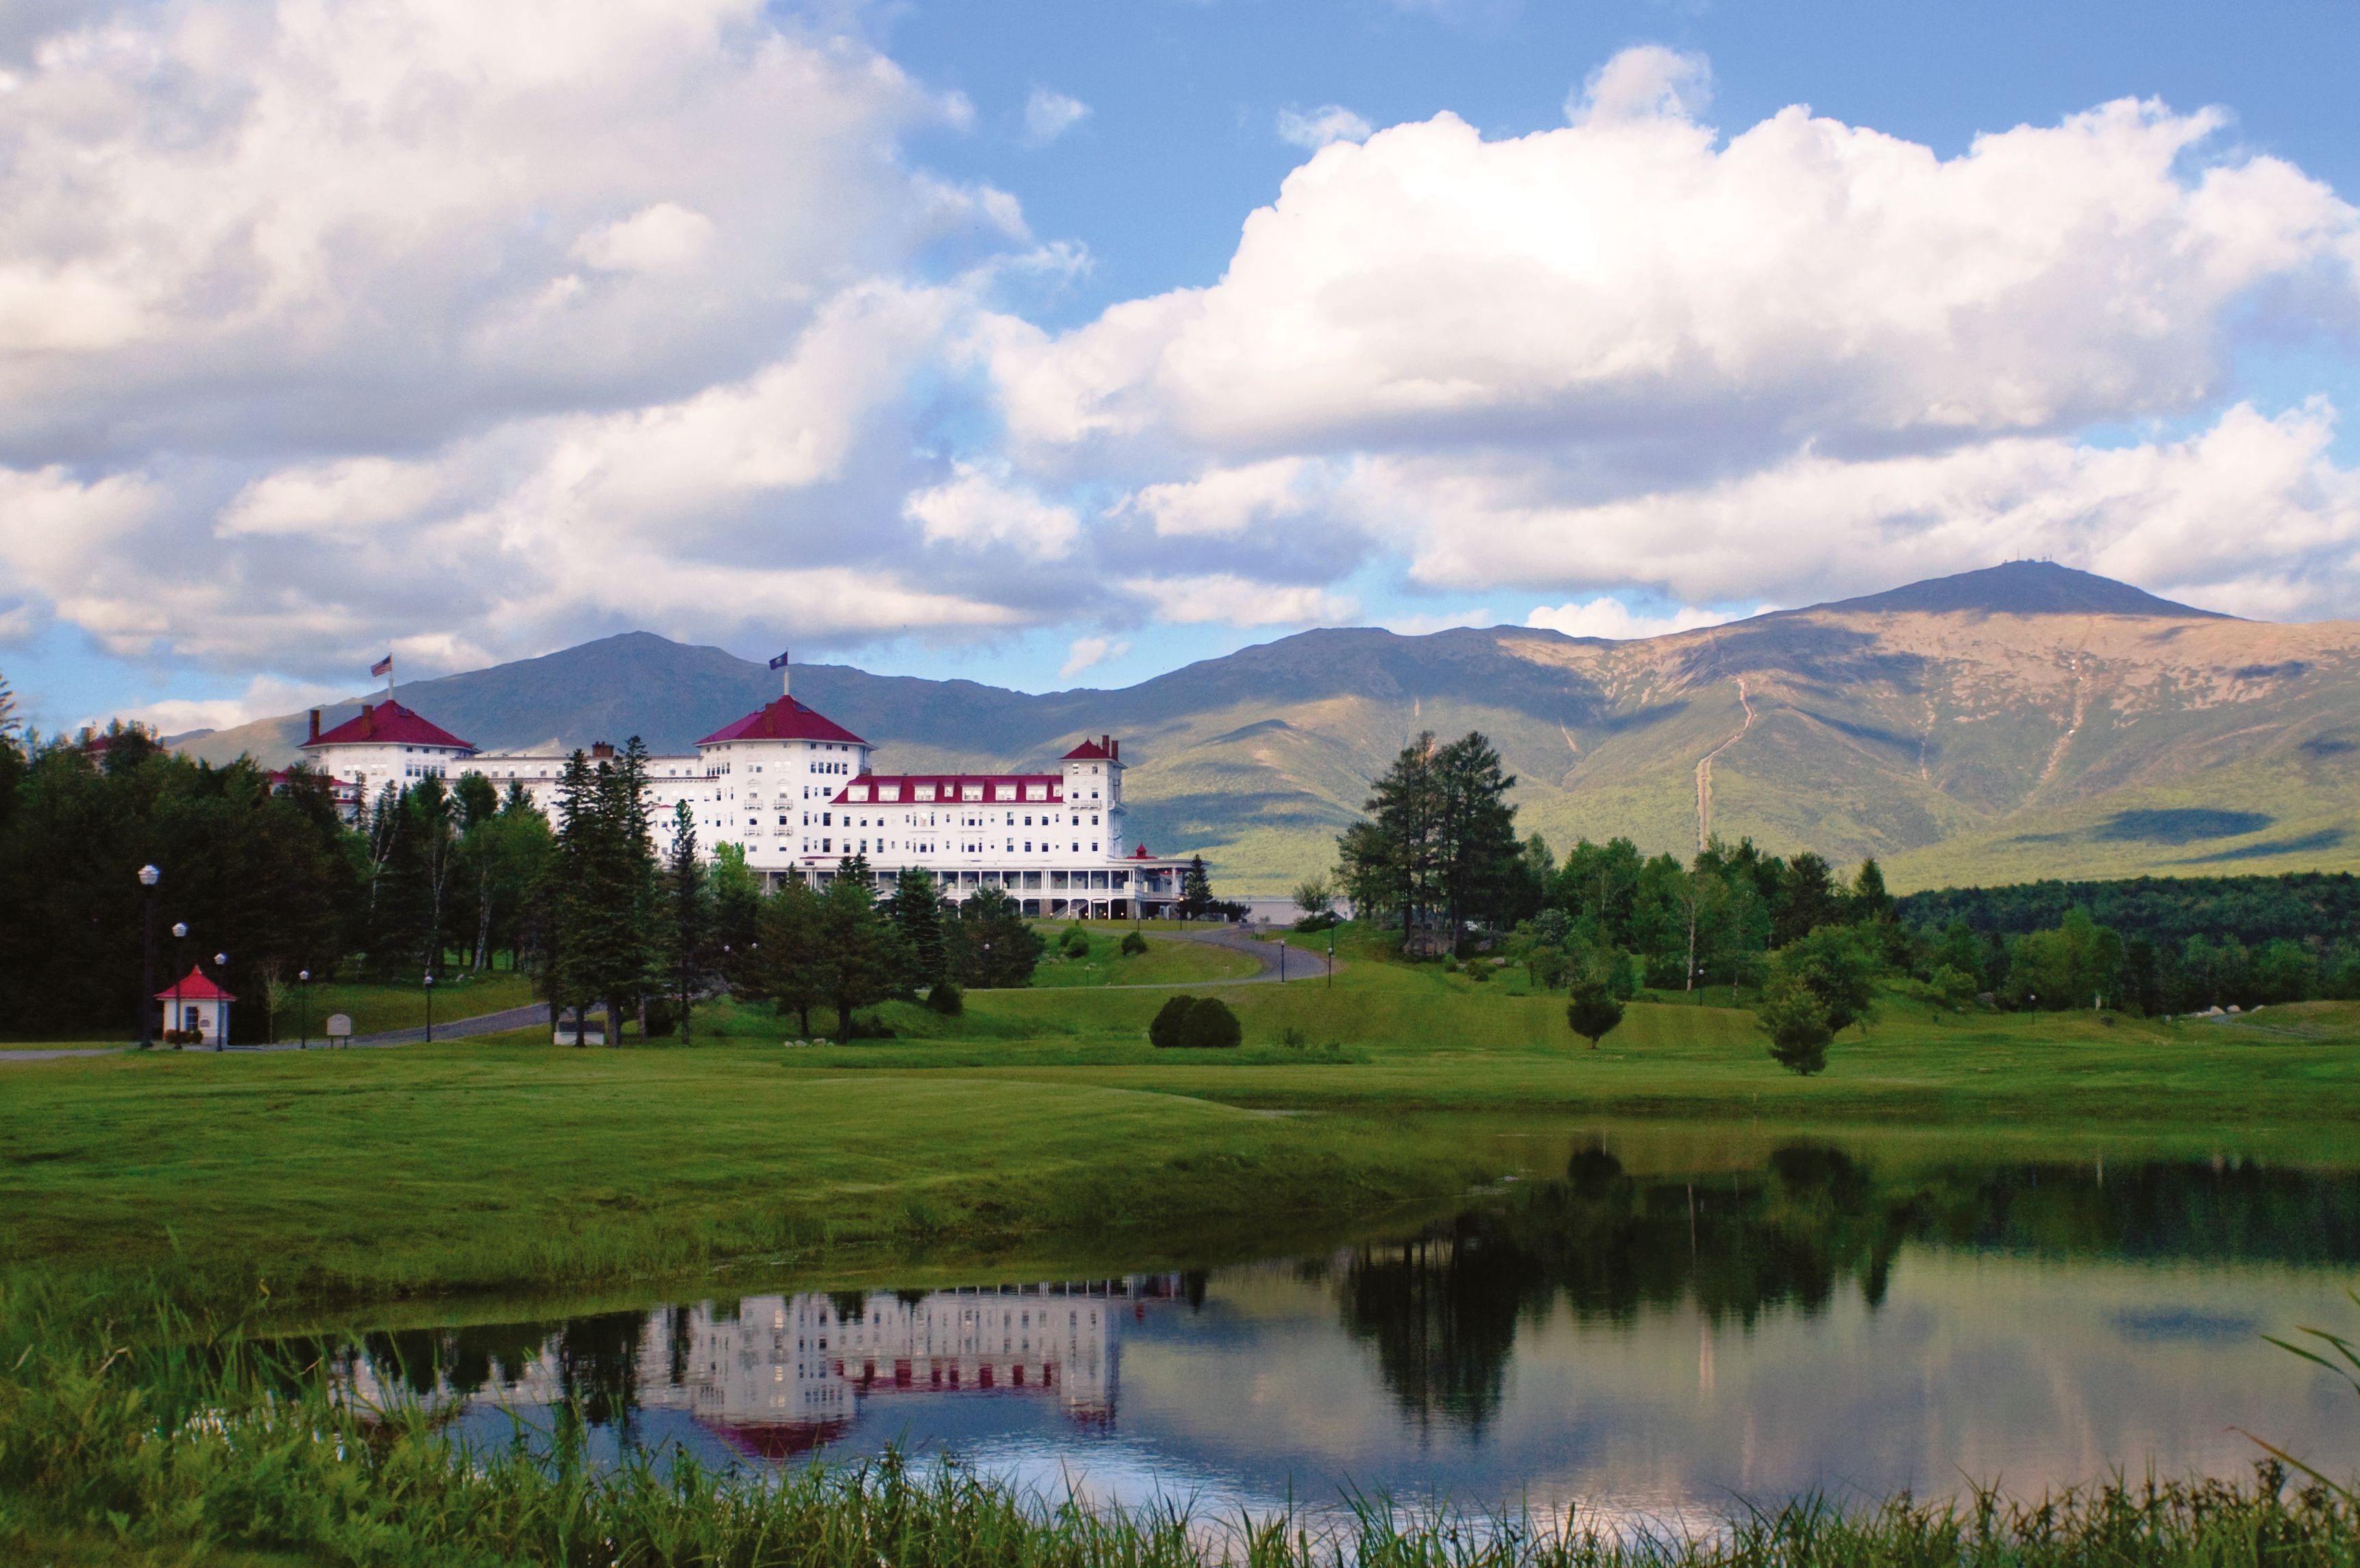 Omni Mount Washington Resort embraced by a mesmerizing landscape